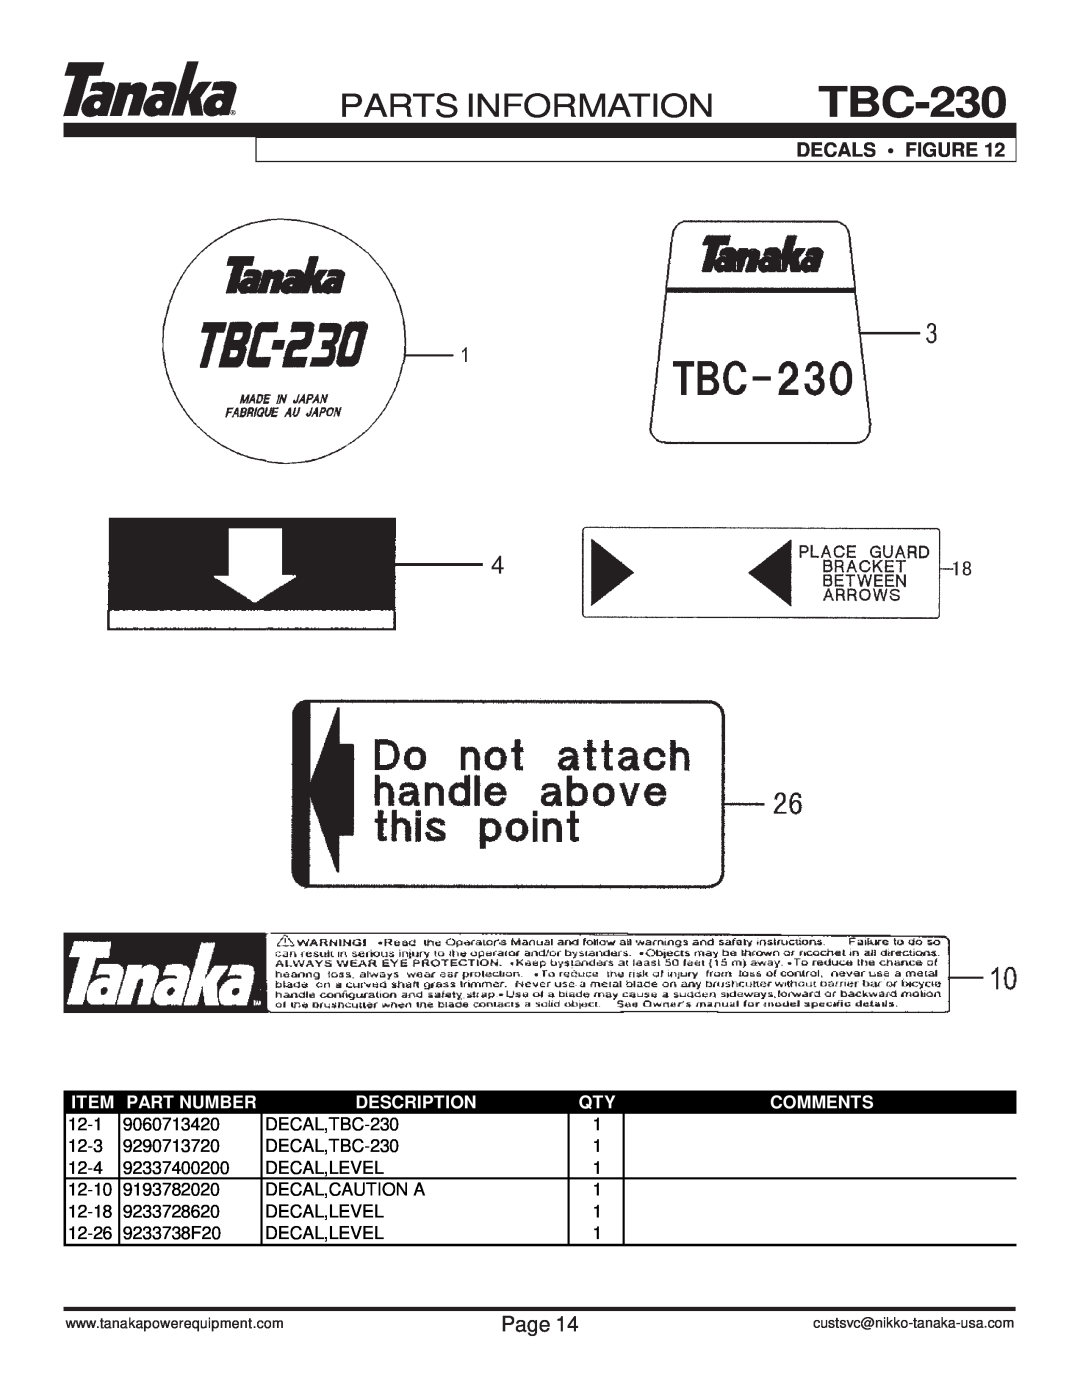 Tanaka TBC-230 manual Parts Information, Page, Decals Figure, Part Number, Description, Comments 